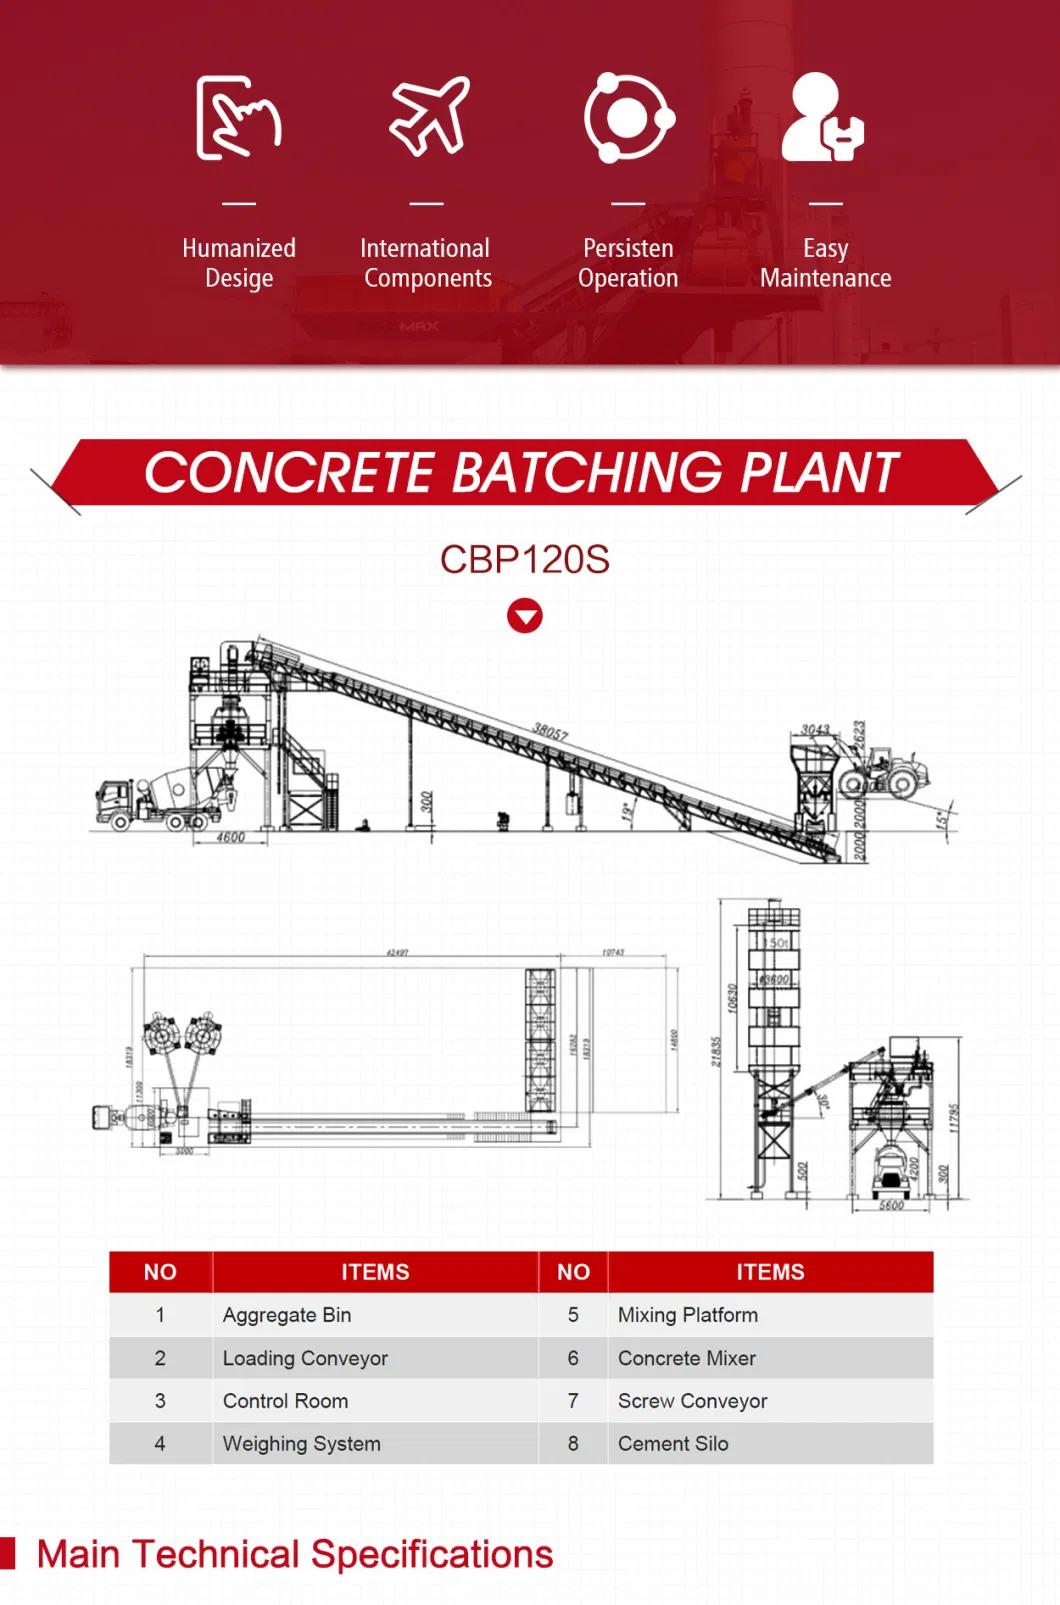 Truemax Mixing Concrete Machinery Cbp120s (HZS120) Stationary Portable Mixer Concrete Batching Plant